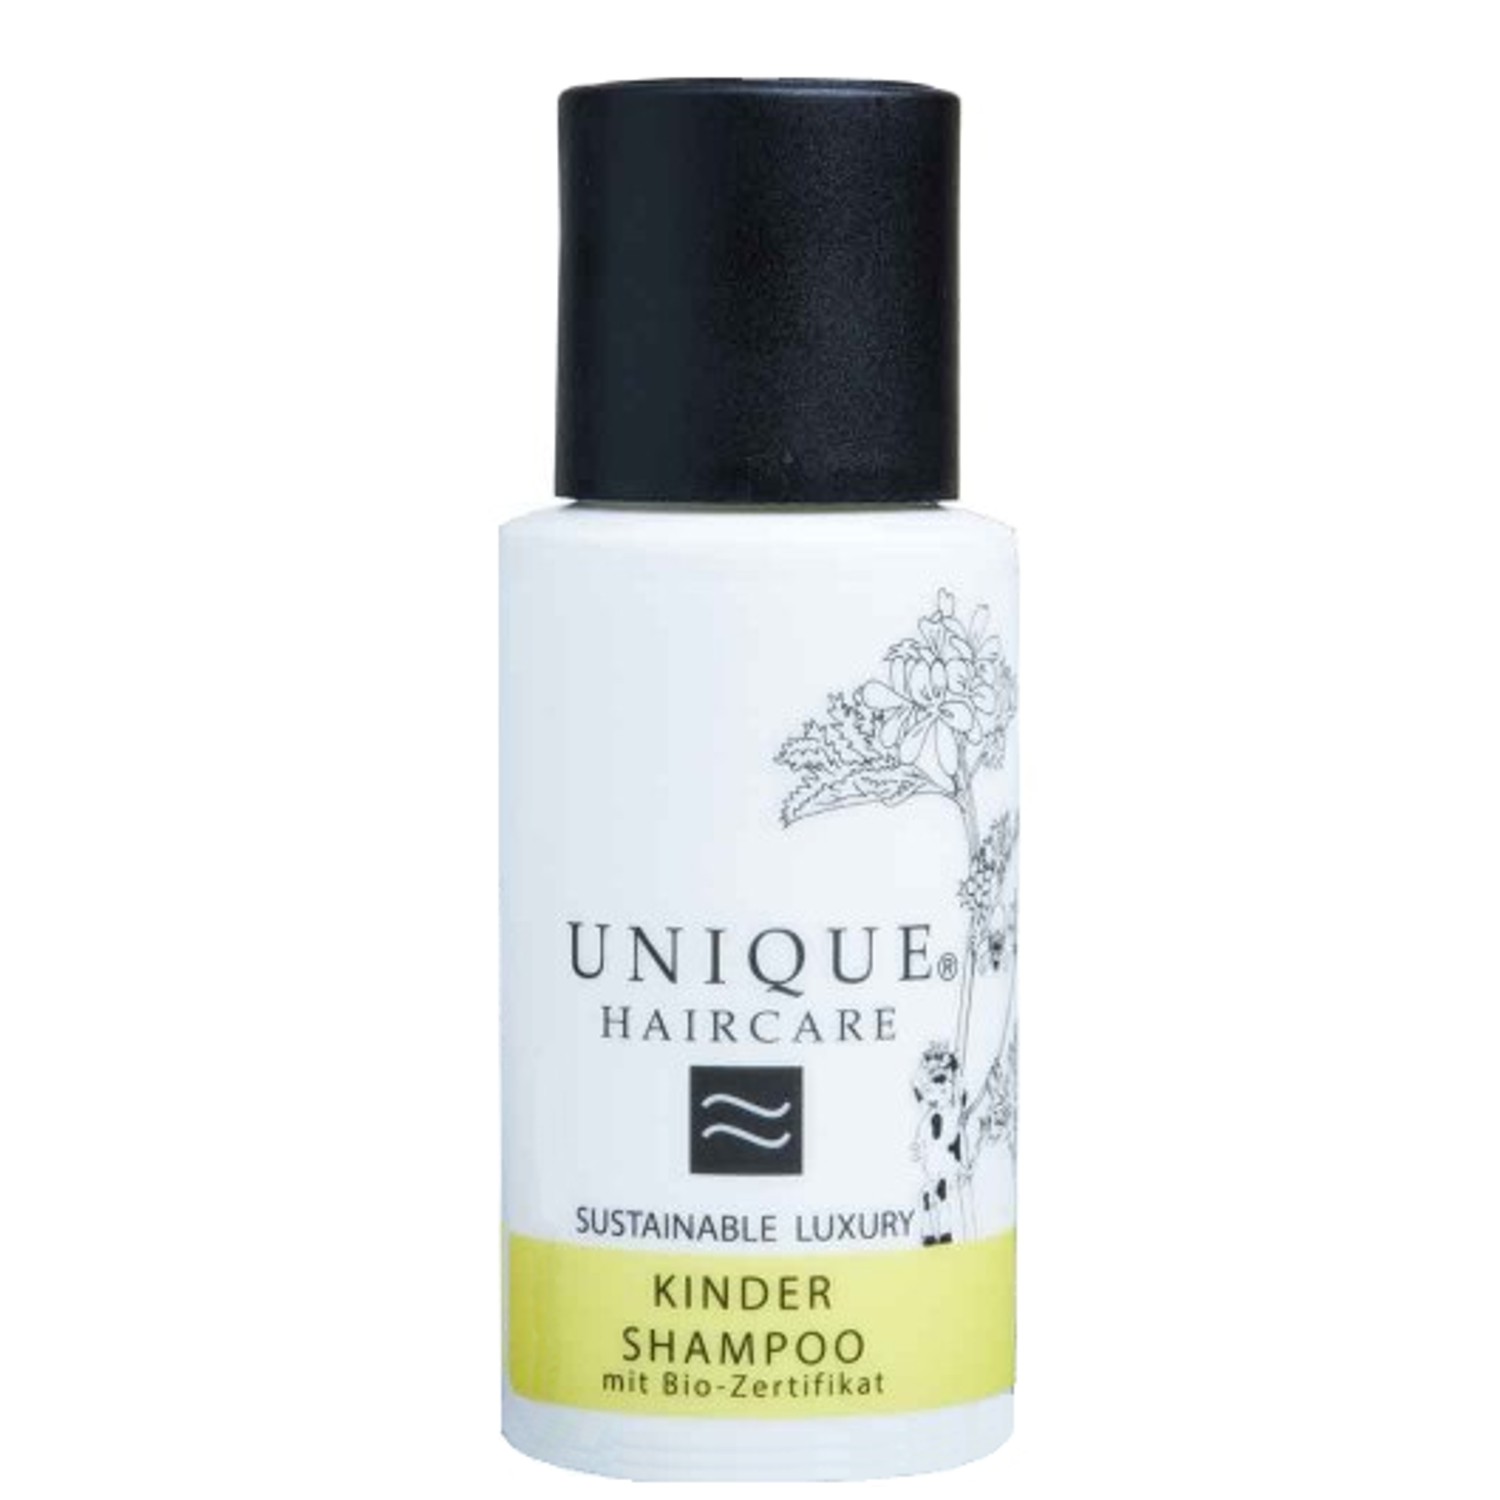 UNIQUE Haircare Kinder Shampoo 50 ml